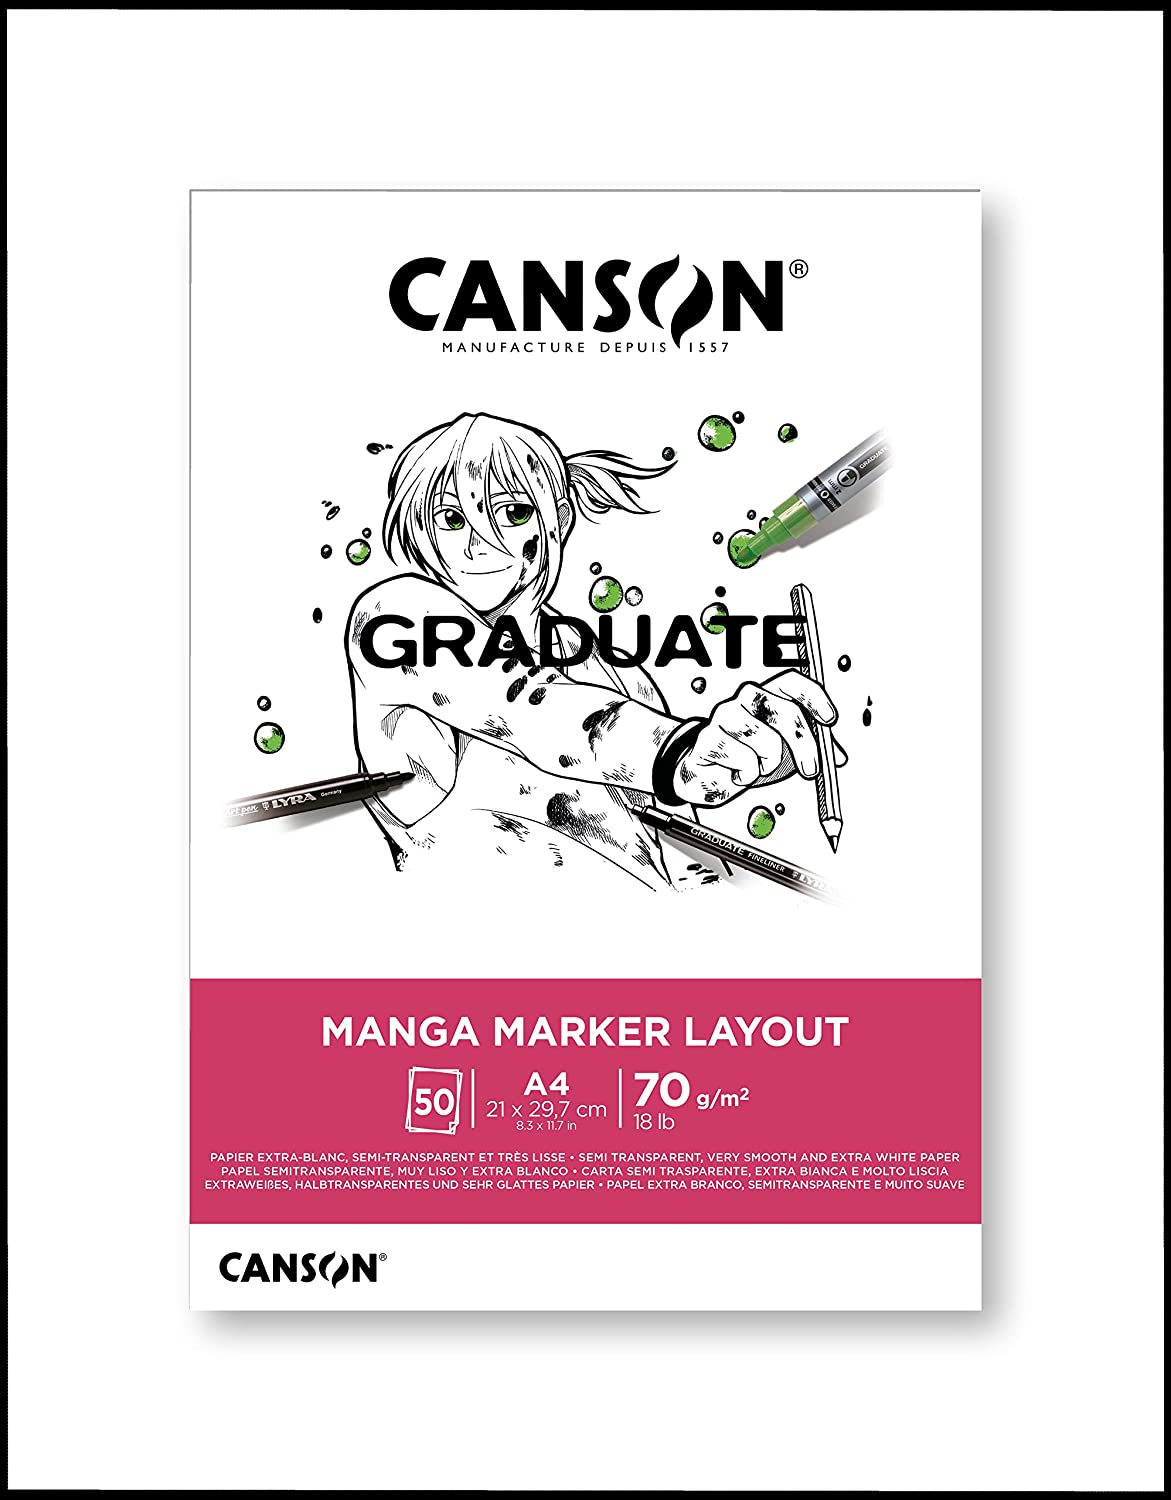 Chanson-dessin-graduate-manga-bloc-papier